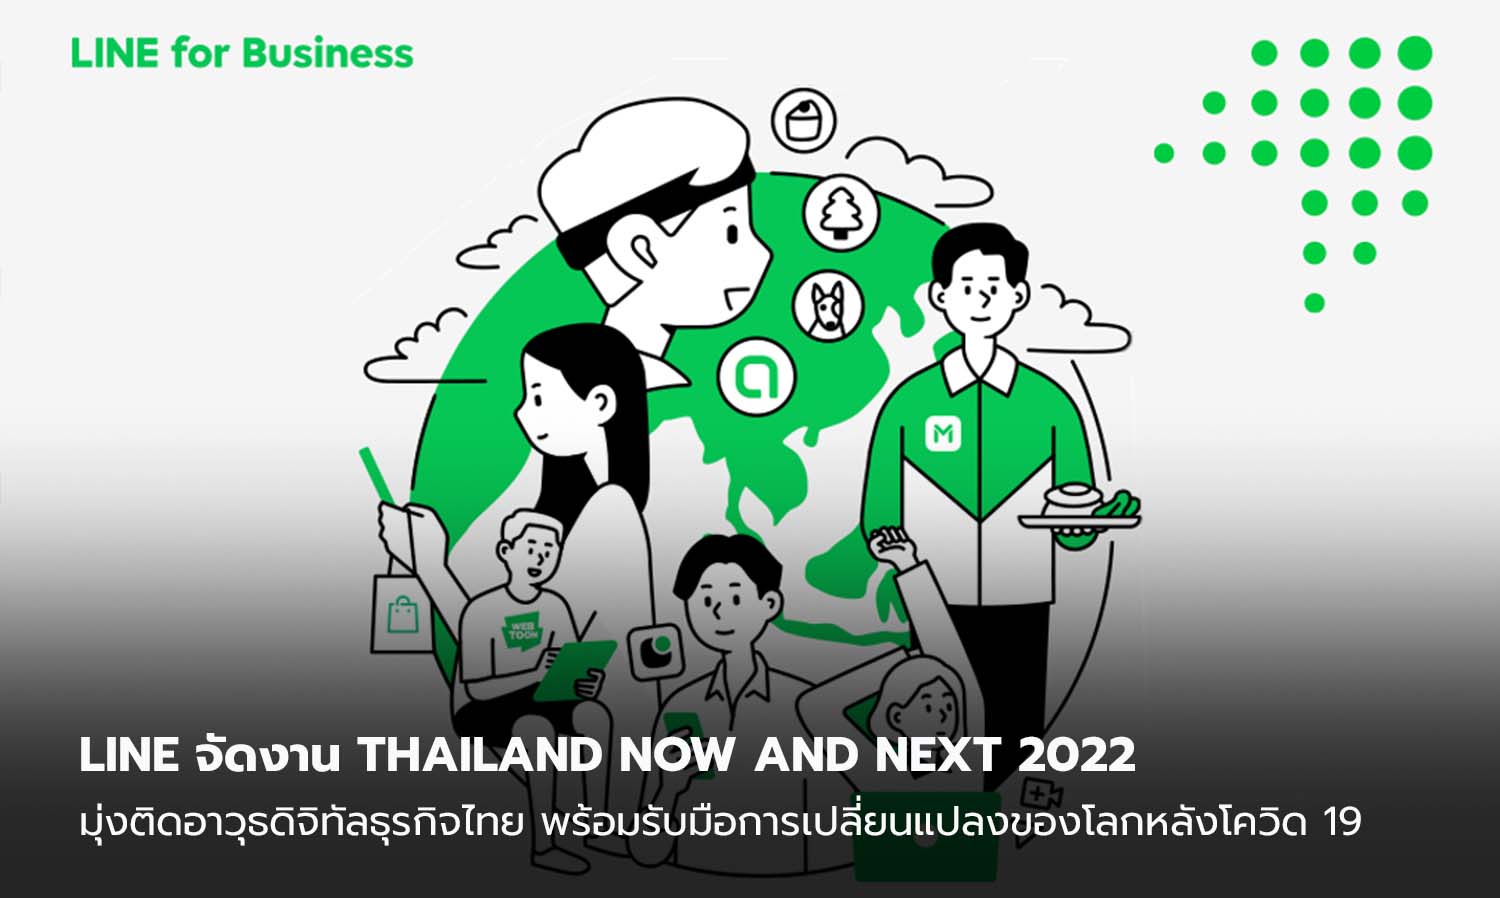 LINE จัดงาน THAILAND NOW AND NEXT 2022: PREPARING FOR THE CHANGING WORLD  มุ่งติดอาวุธดิจิทัลธุรกิจไทย พร้อมรับมือการเปลี่ยนแปลงของโลกหลังโควิด 19